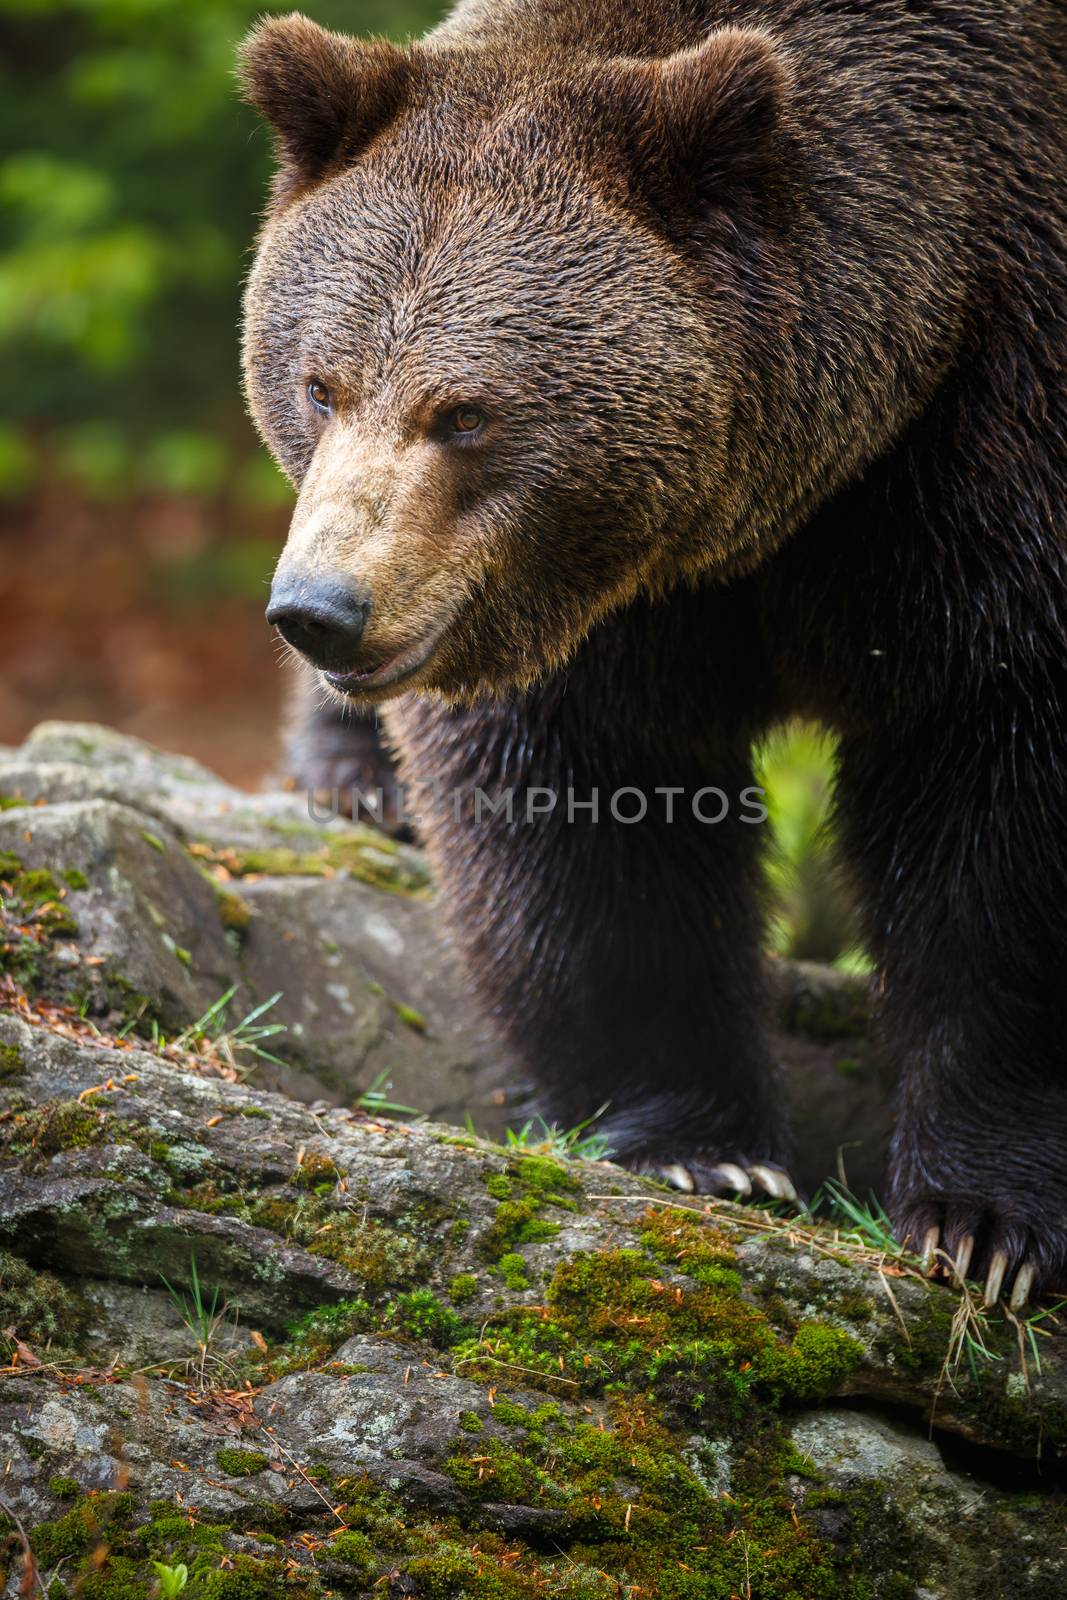 Brown bear (Ursus arctos) by viktor_cap